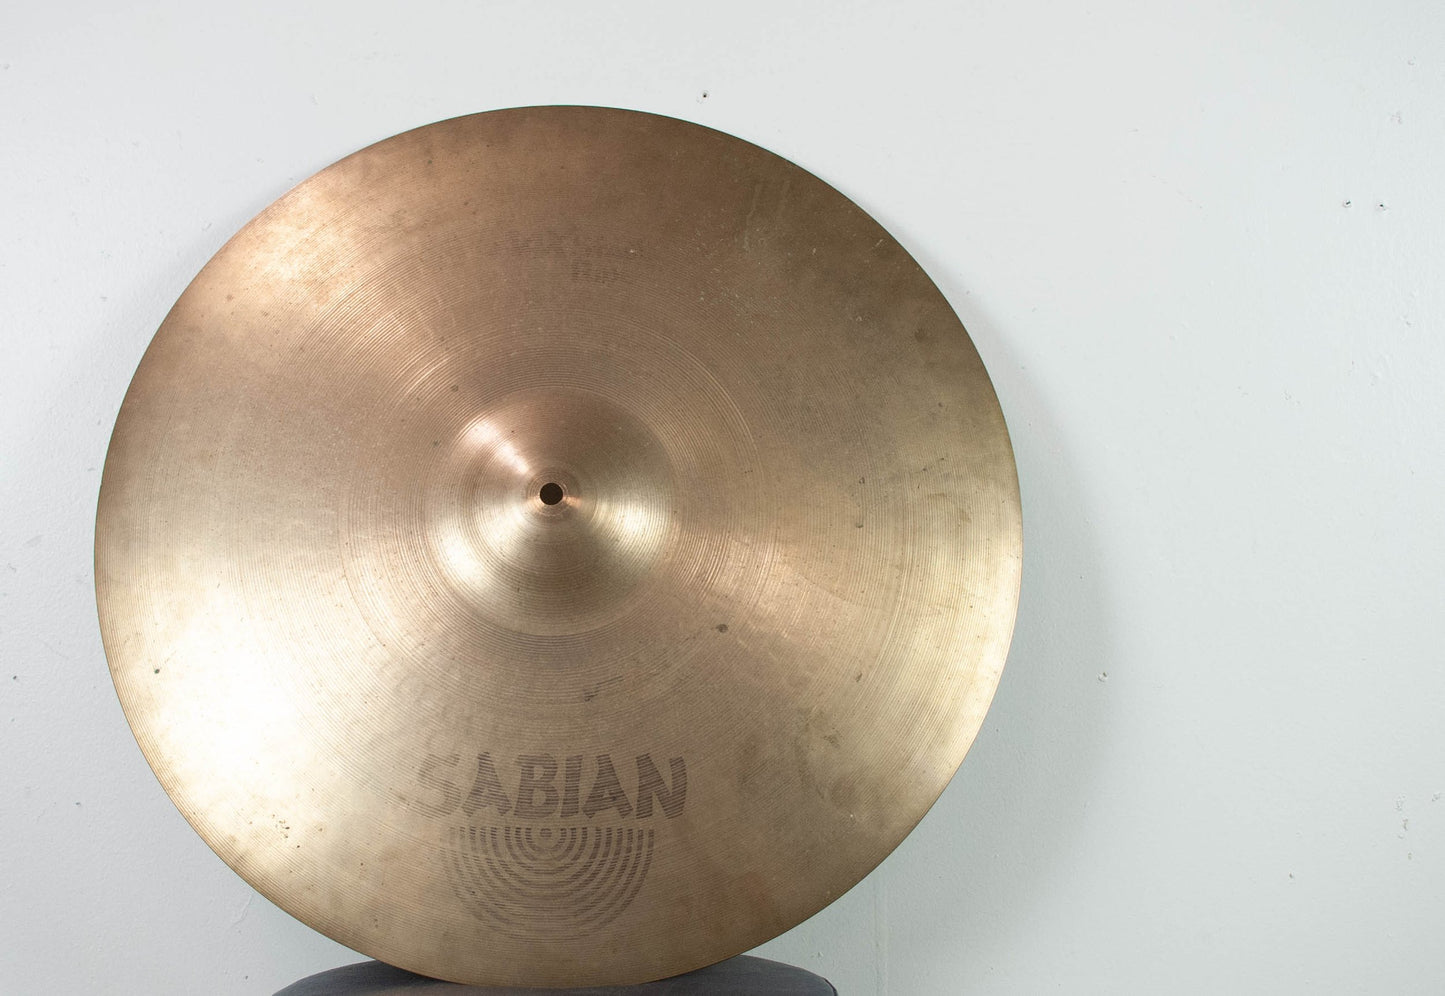 Sabian 21" AAX Stage Ride Cymbal 2901g